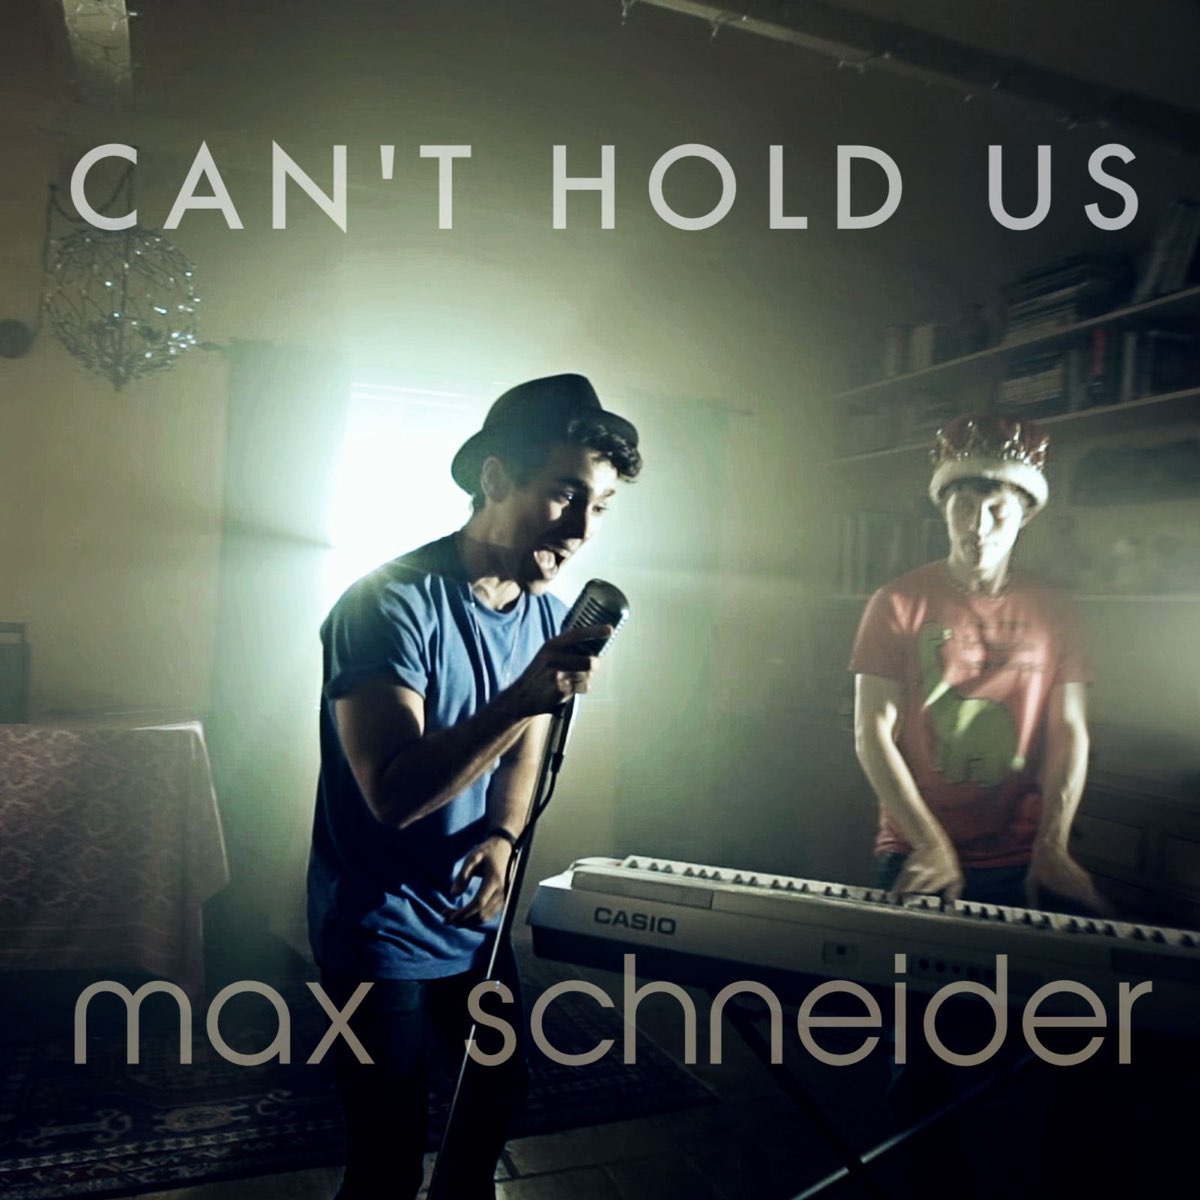 Can't hold us обложка. Max Schneider песни. Cant hold us. Can't hold us текст. Песня hold us